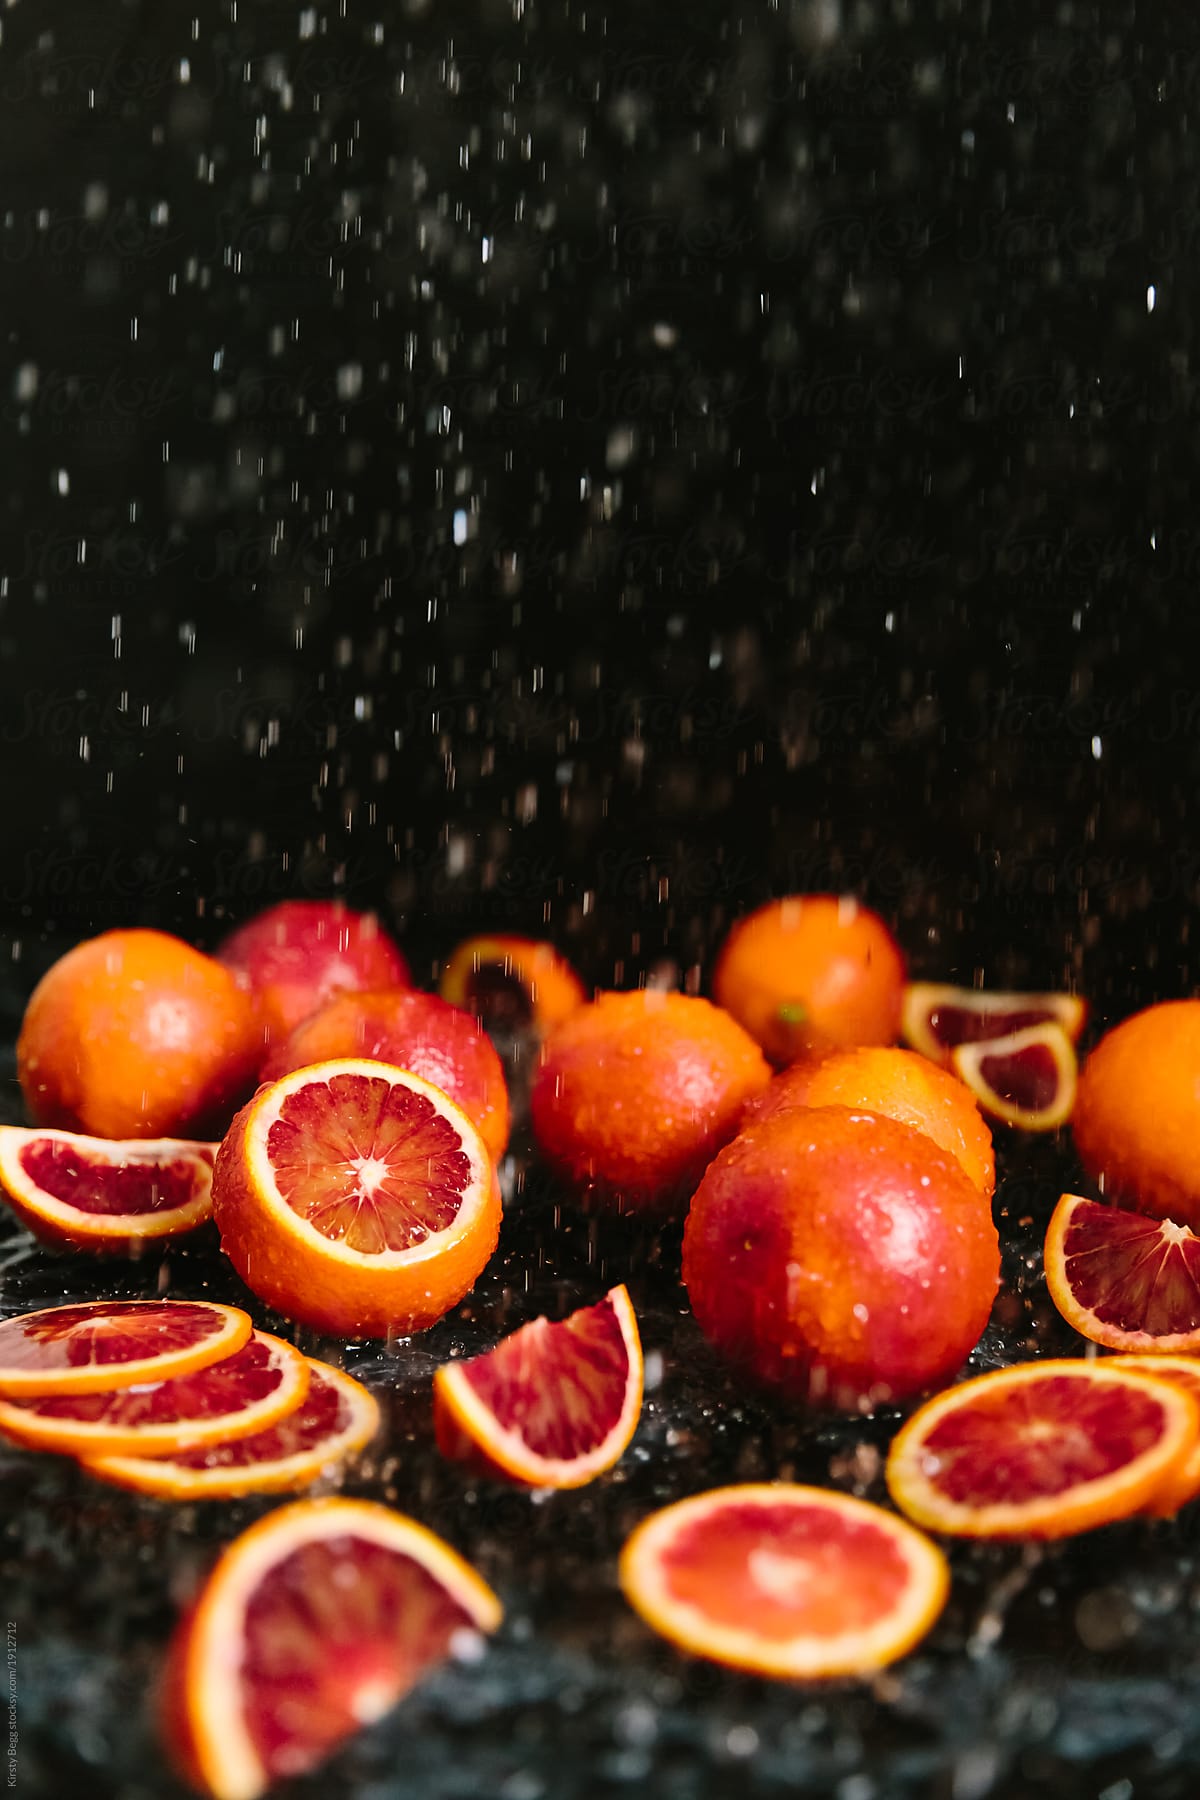 Water falling onto red oranges